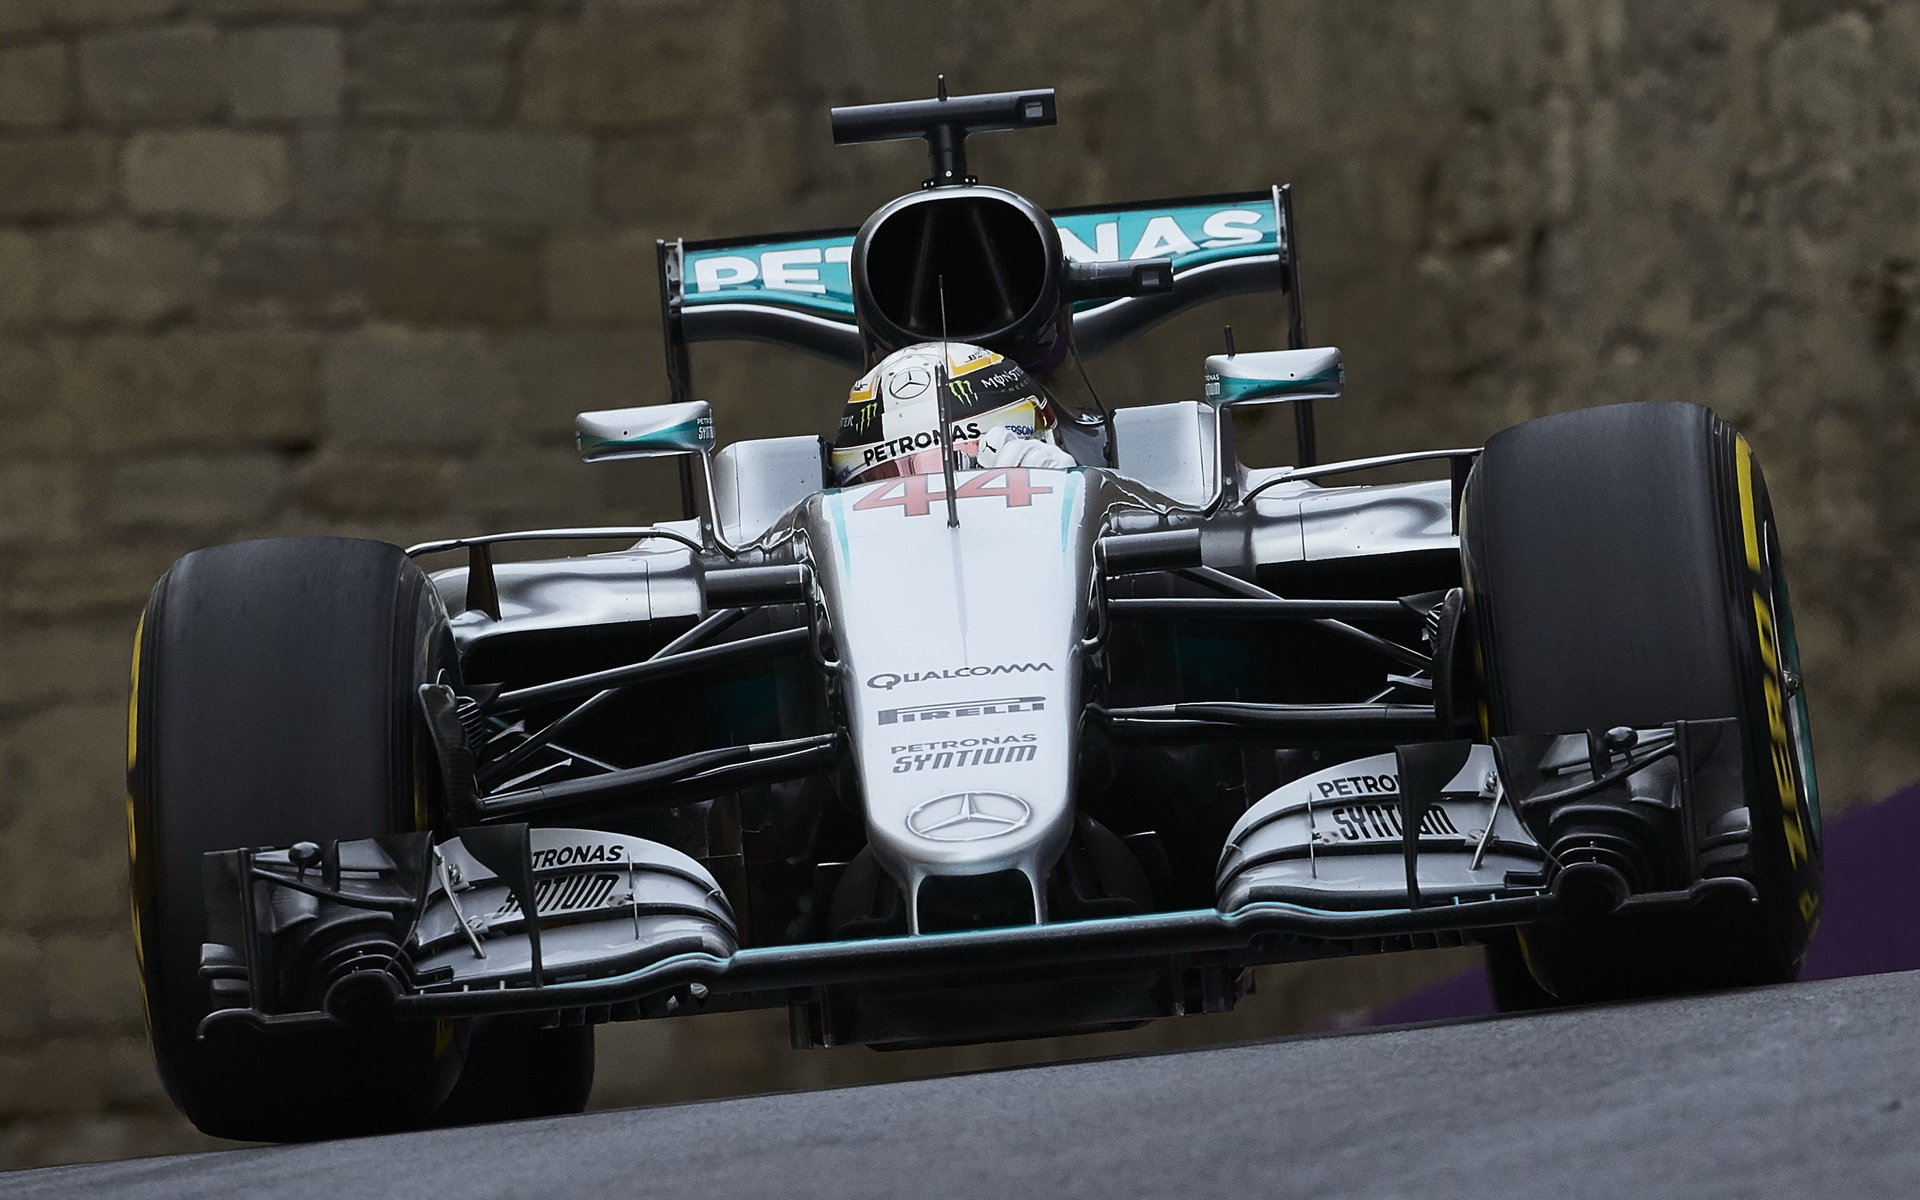 Lewis Hamilton při kvalifikaci v Baku